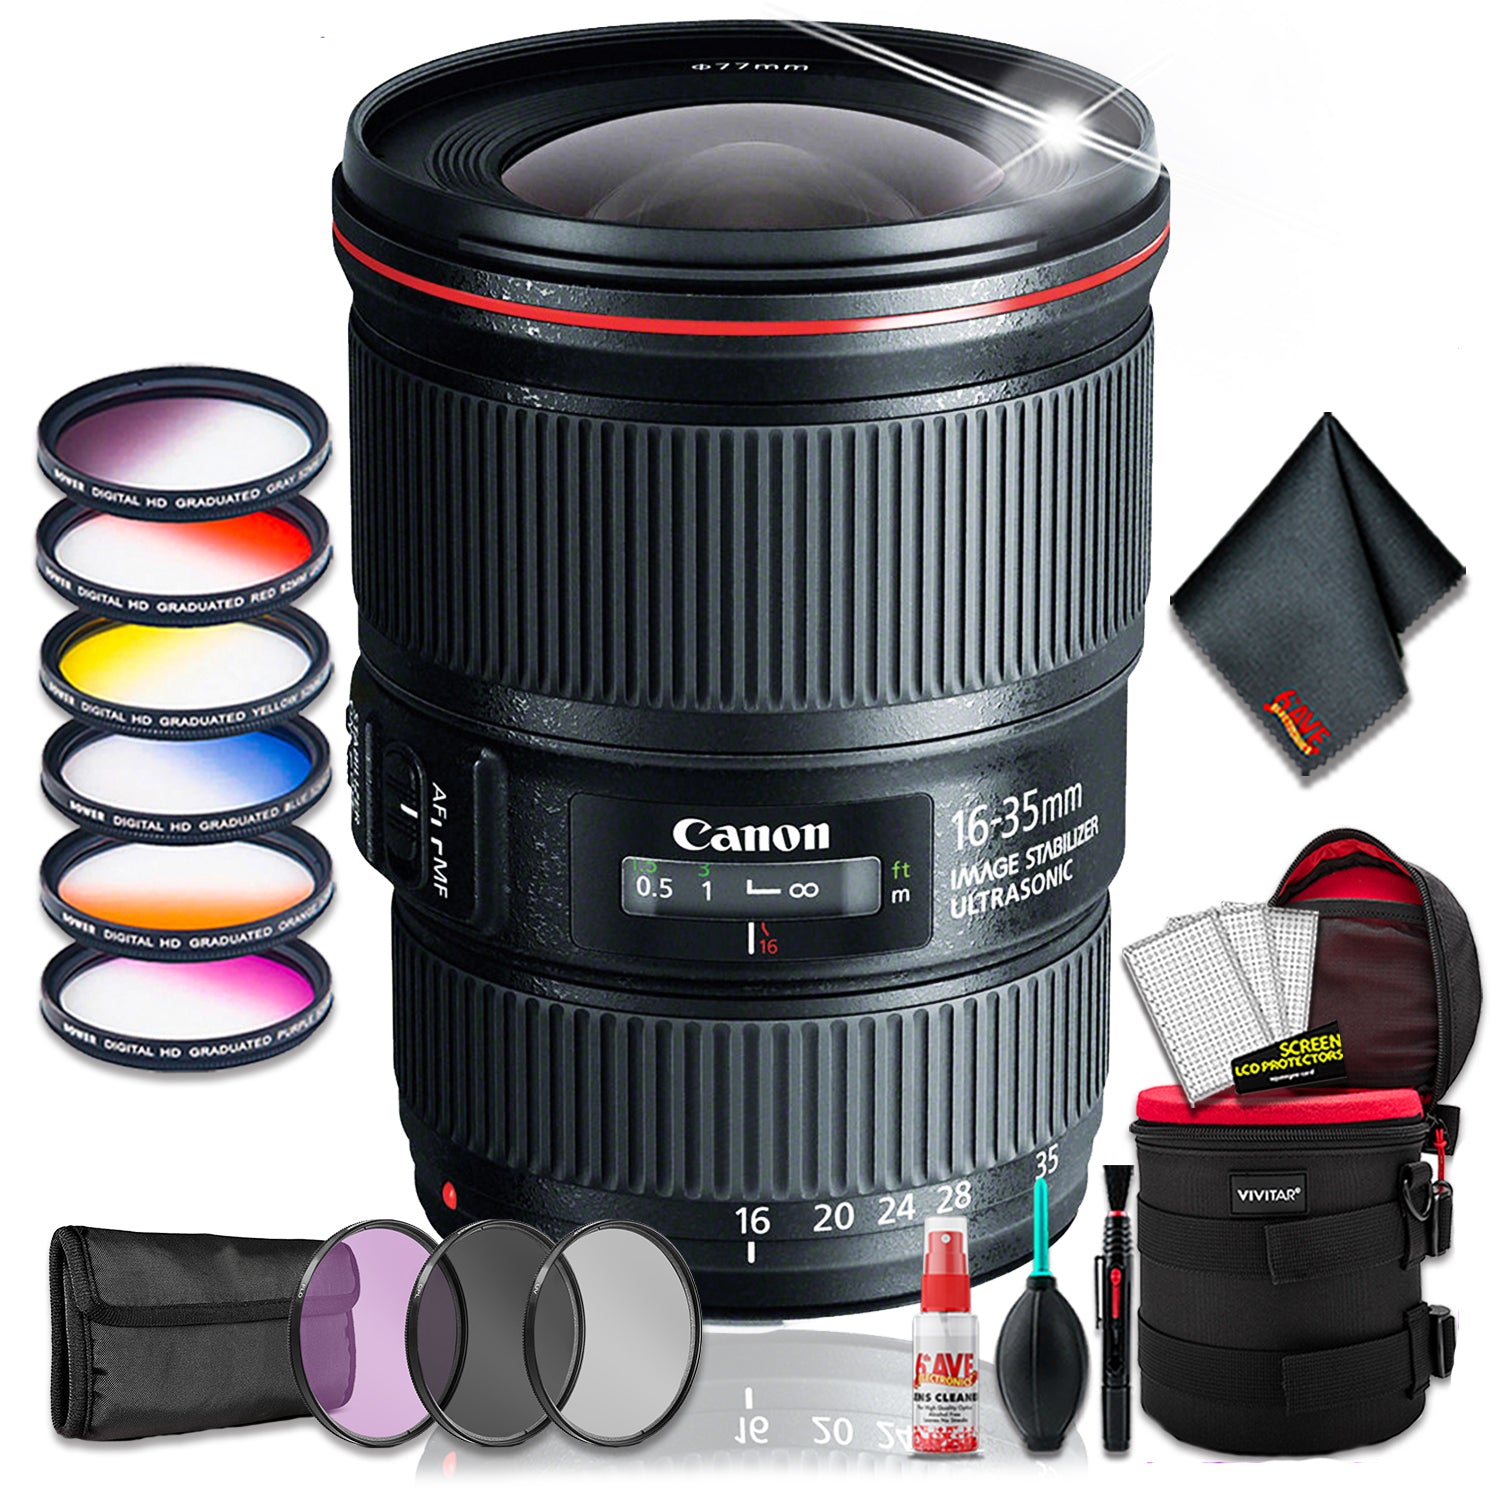 Canon EF 16-35 4.0 f/4 L IS USM (Intl Model) + 6 inch Premium Lens Case + Loaded Lens Filter Kit + Cleaning Kit